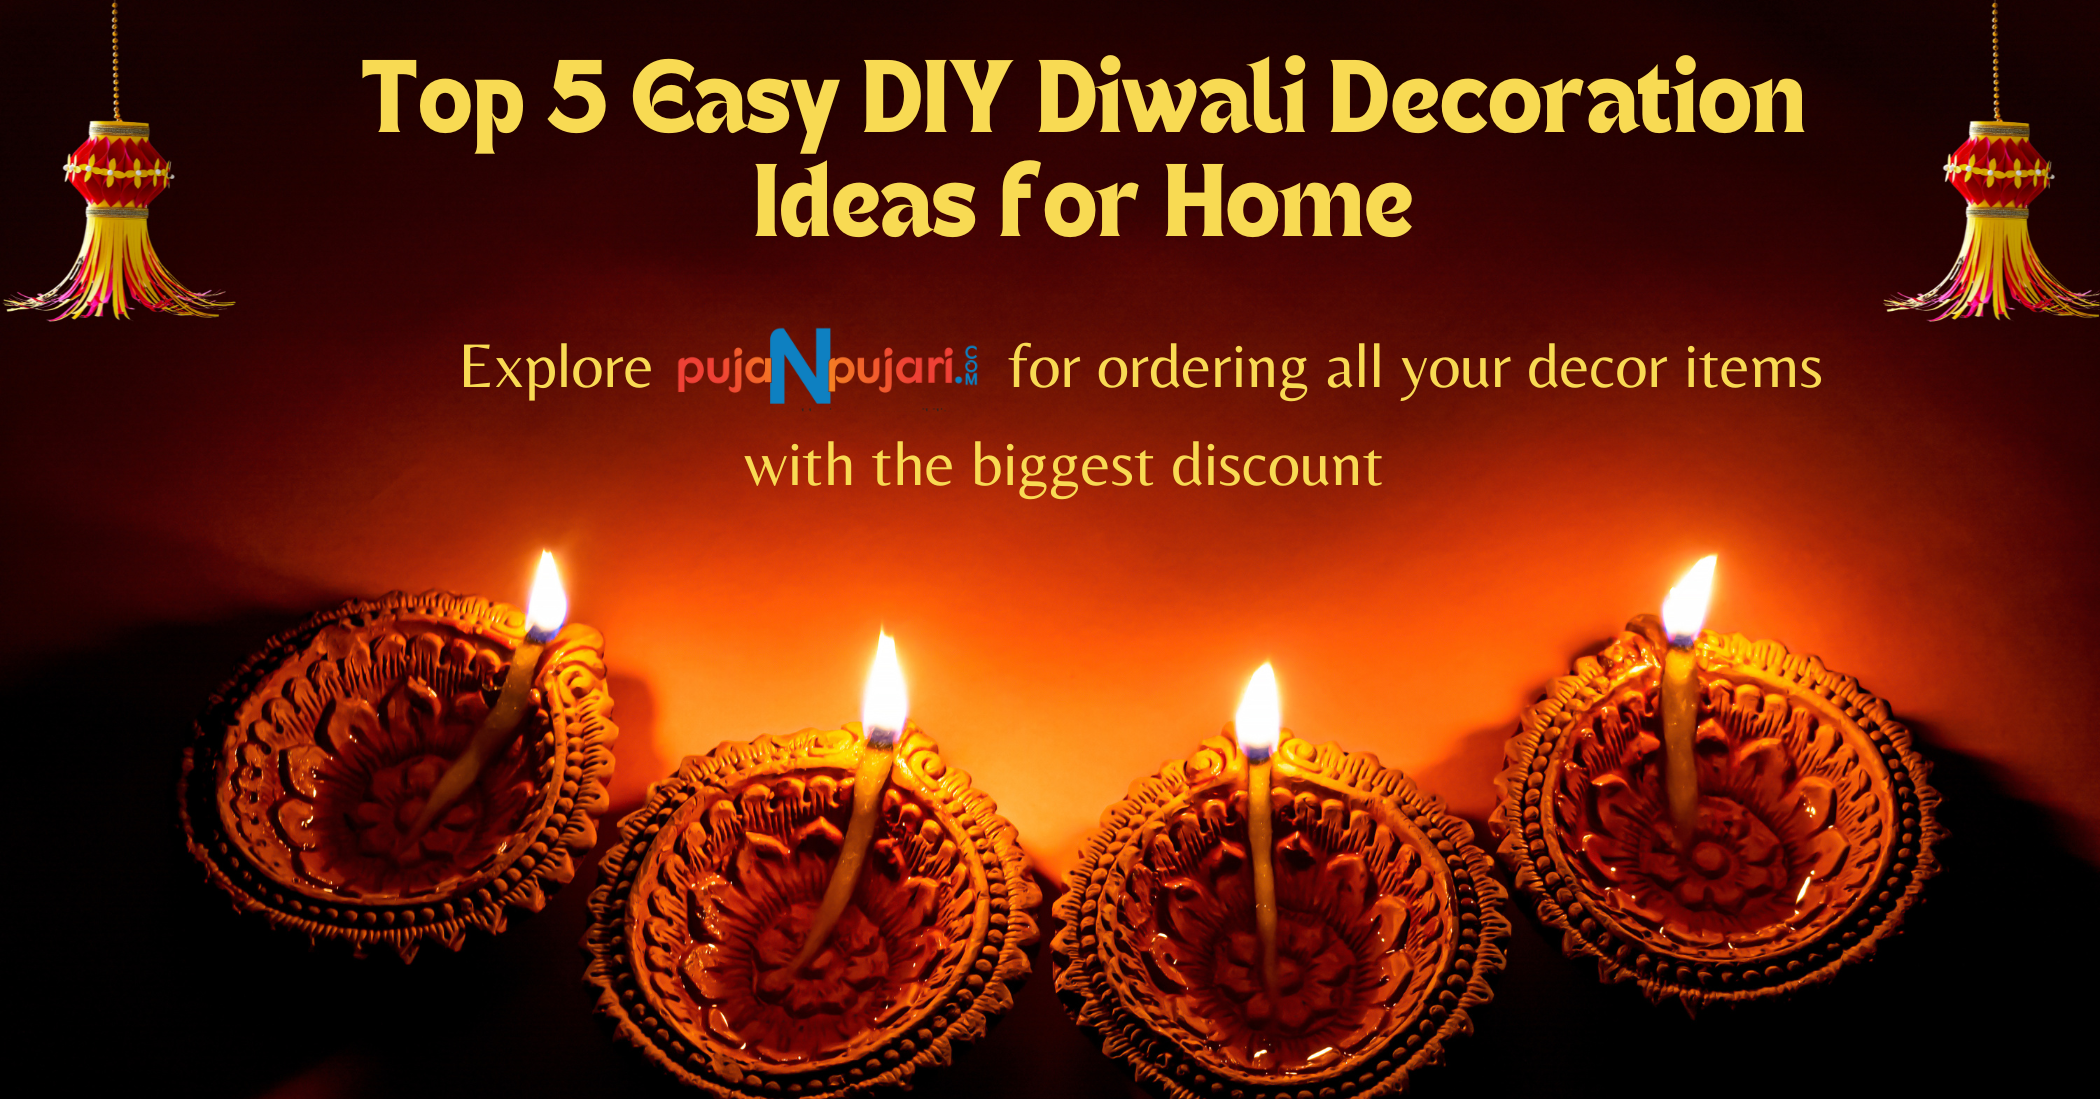 Top 5 DIY Diwali Decoration Ideas for Home: Add Sparkles with Diya Decorations